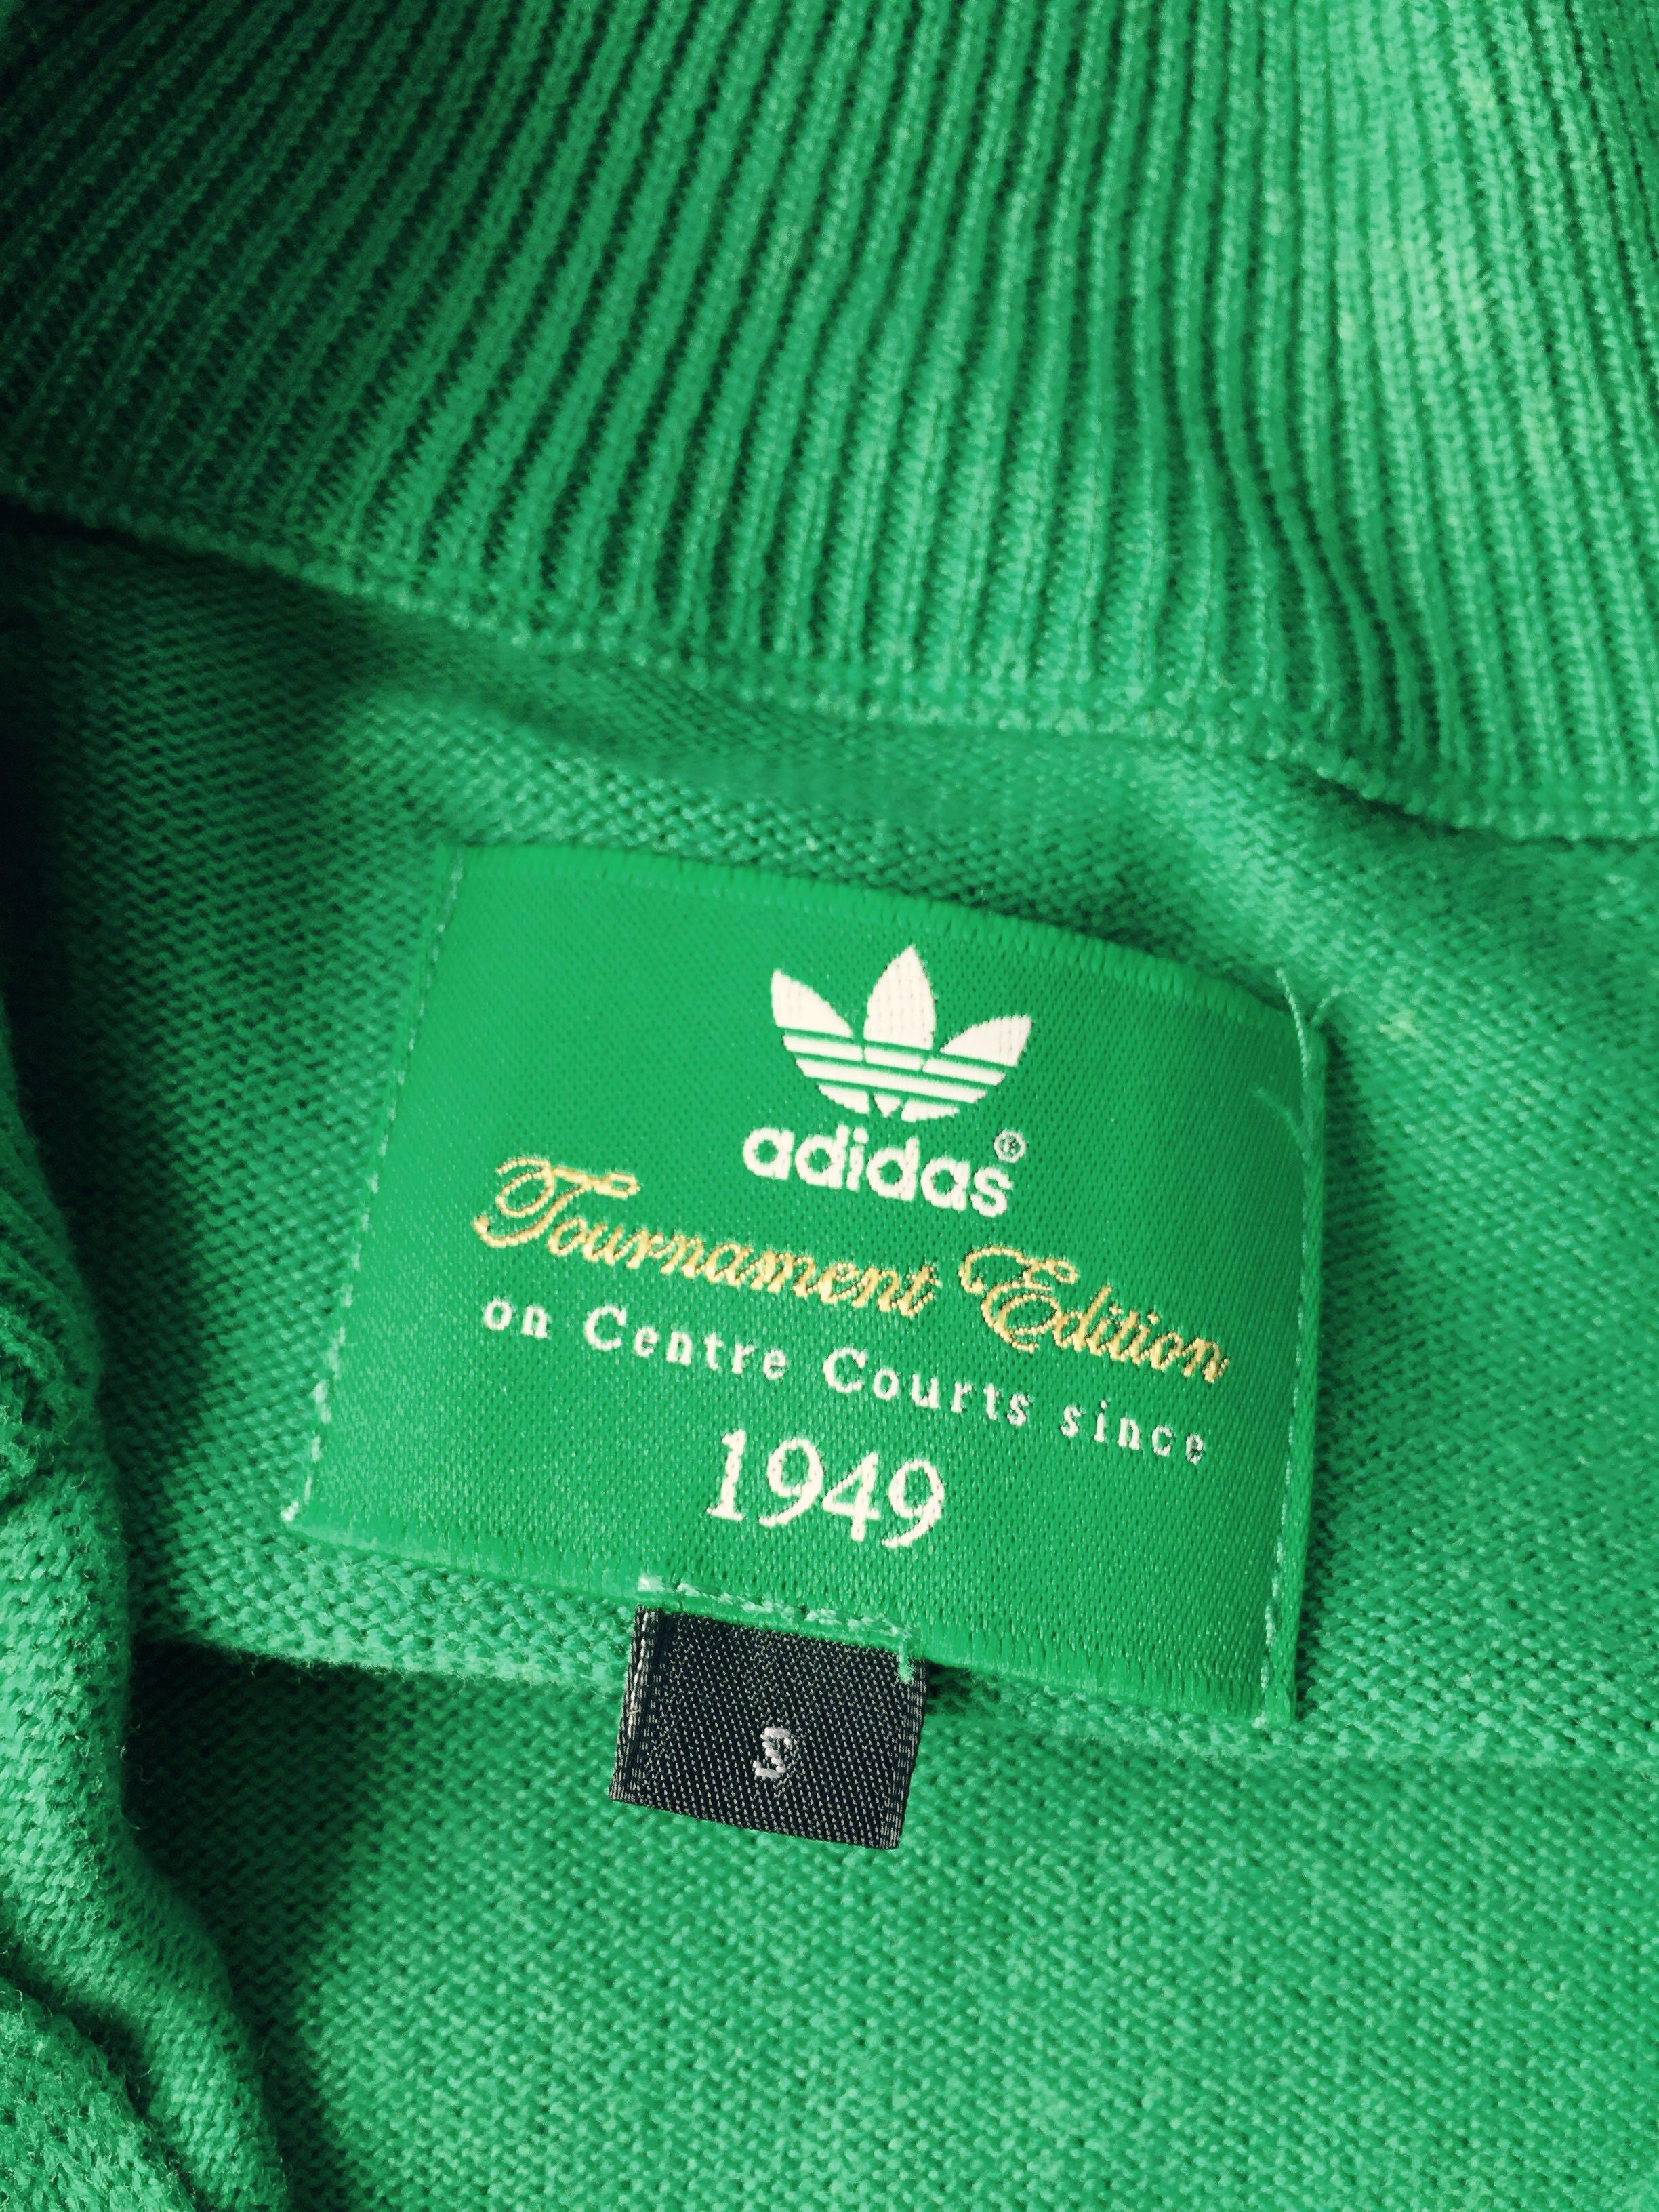 adidas 1949 jacket